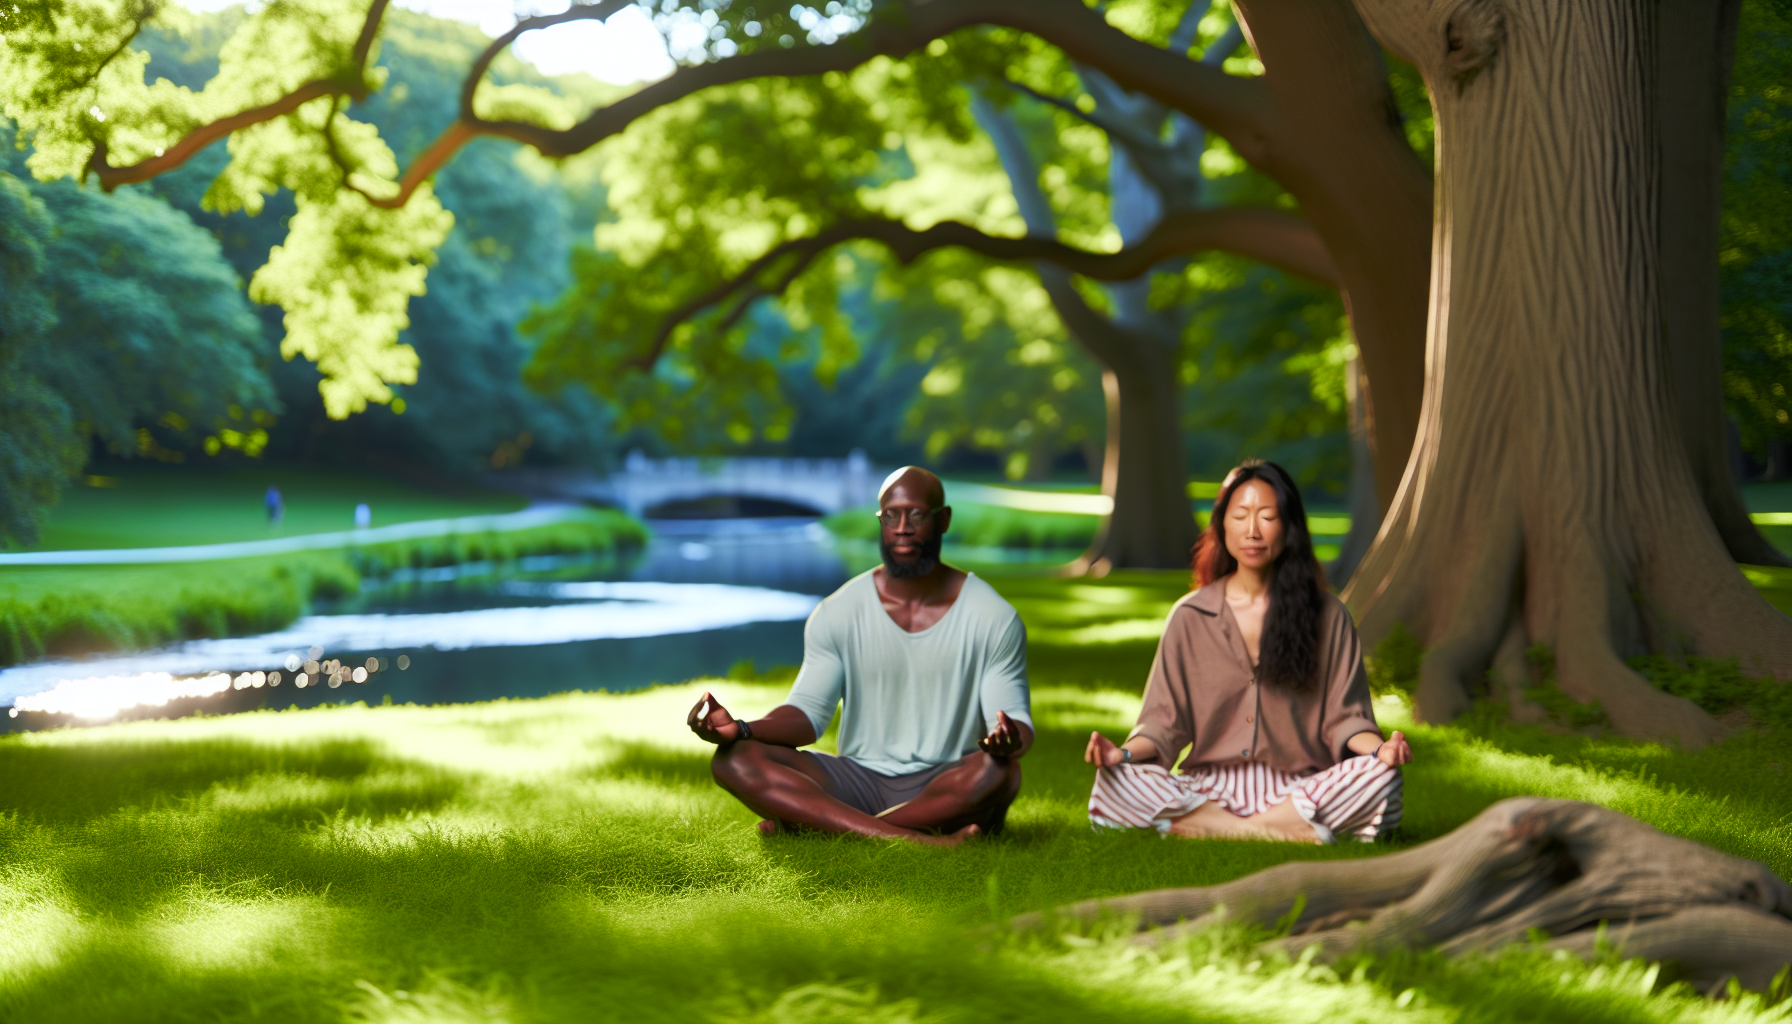 A couple practicing mindfulness meditation together